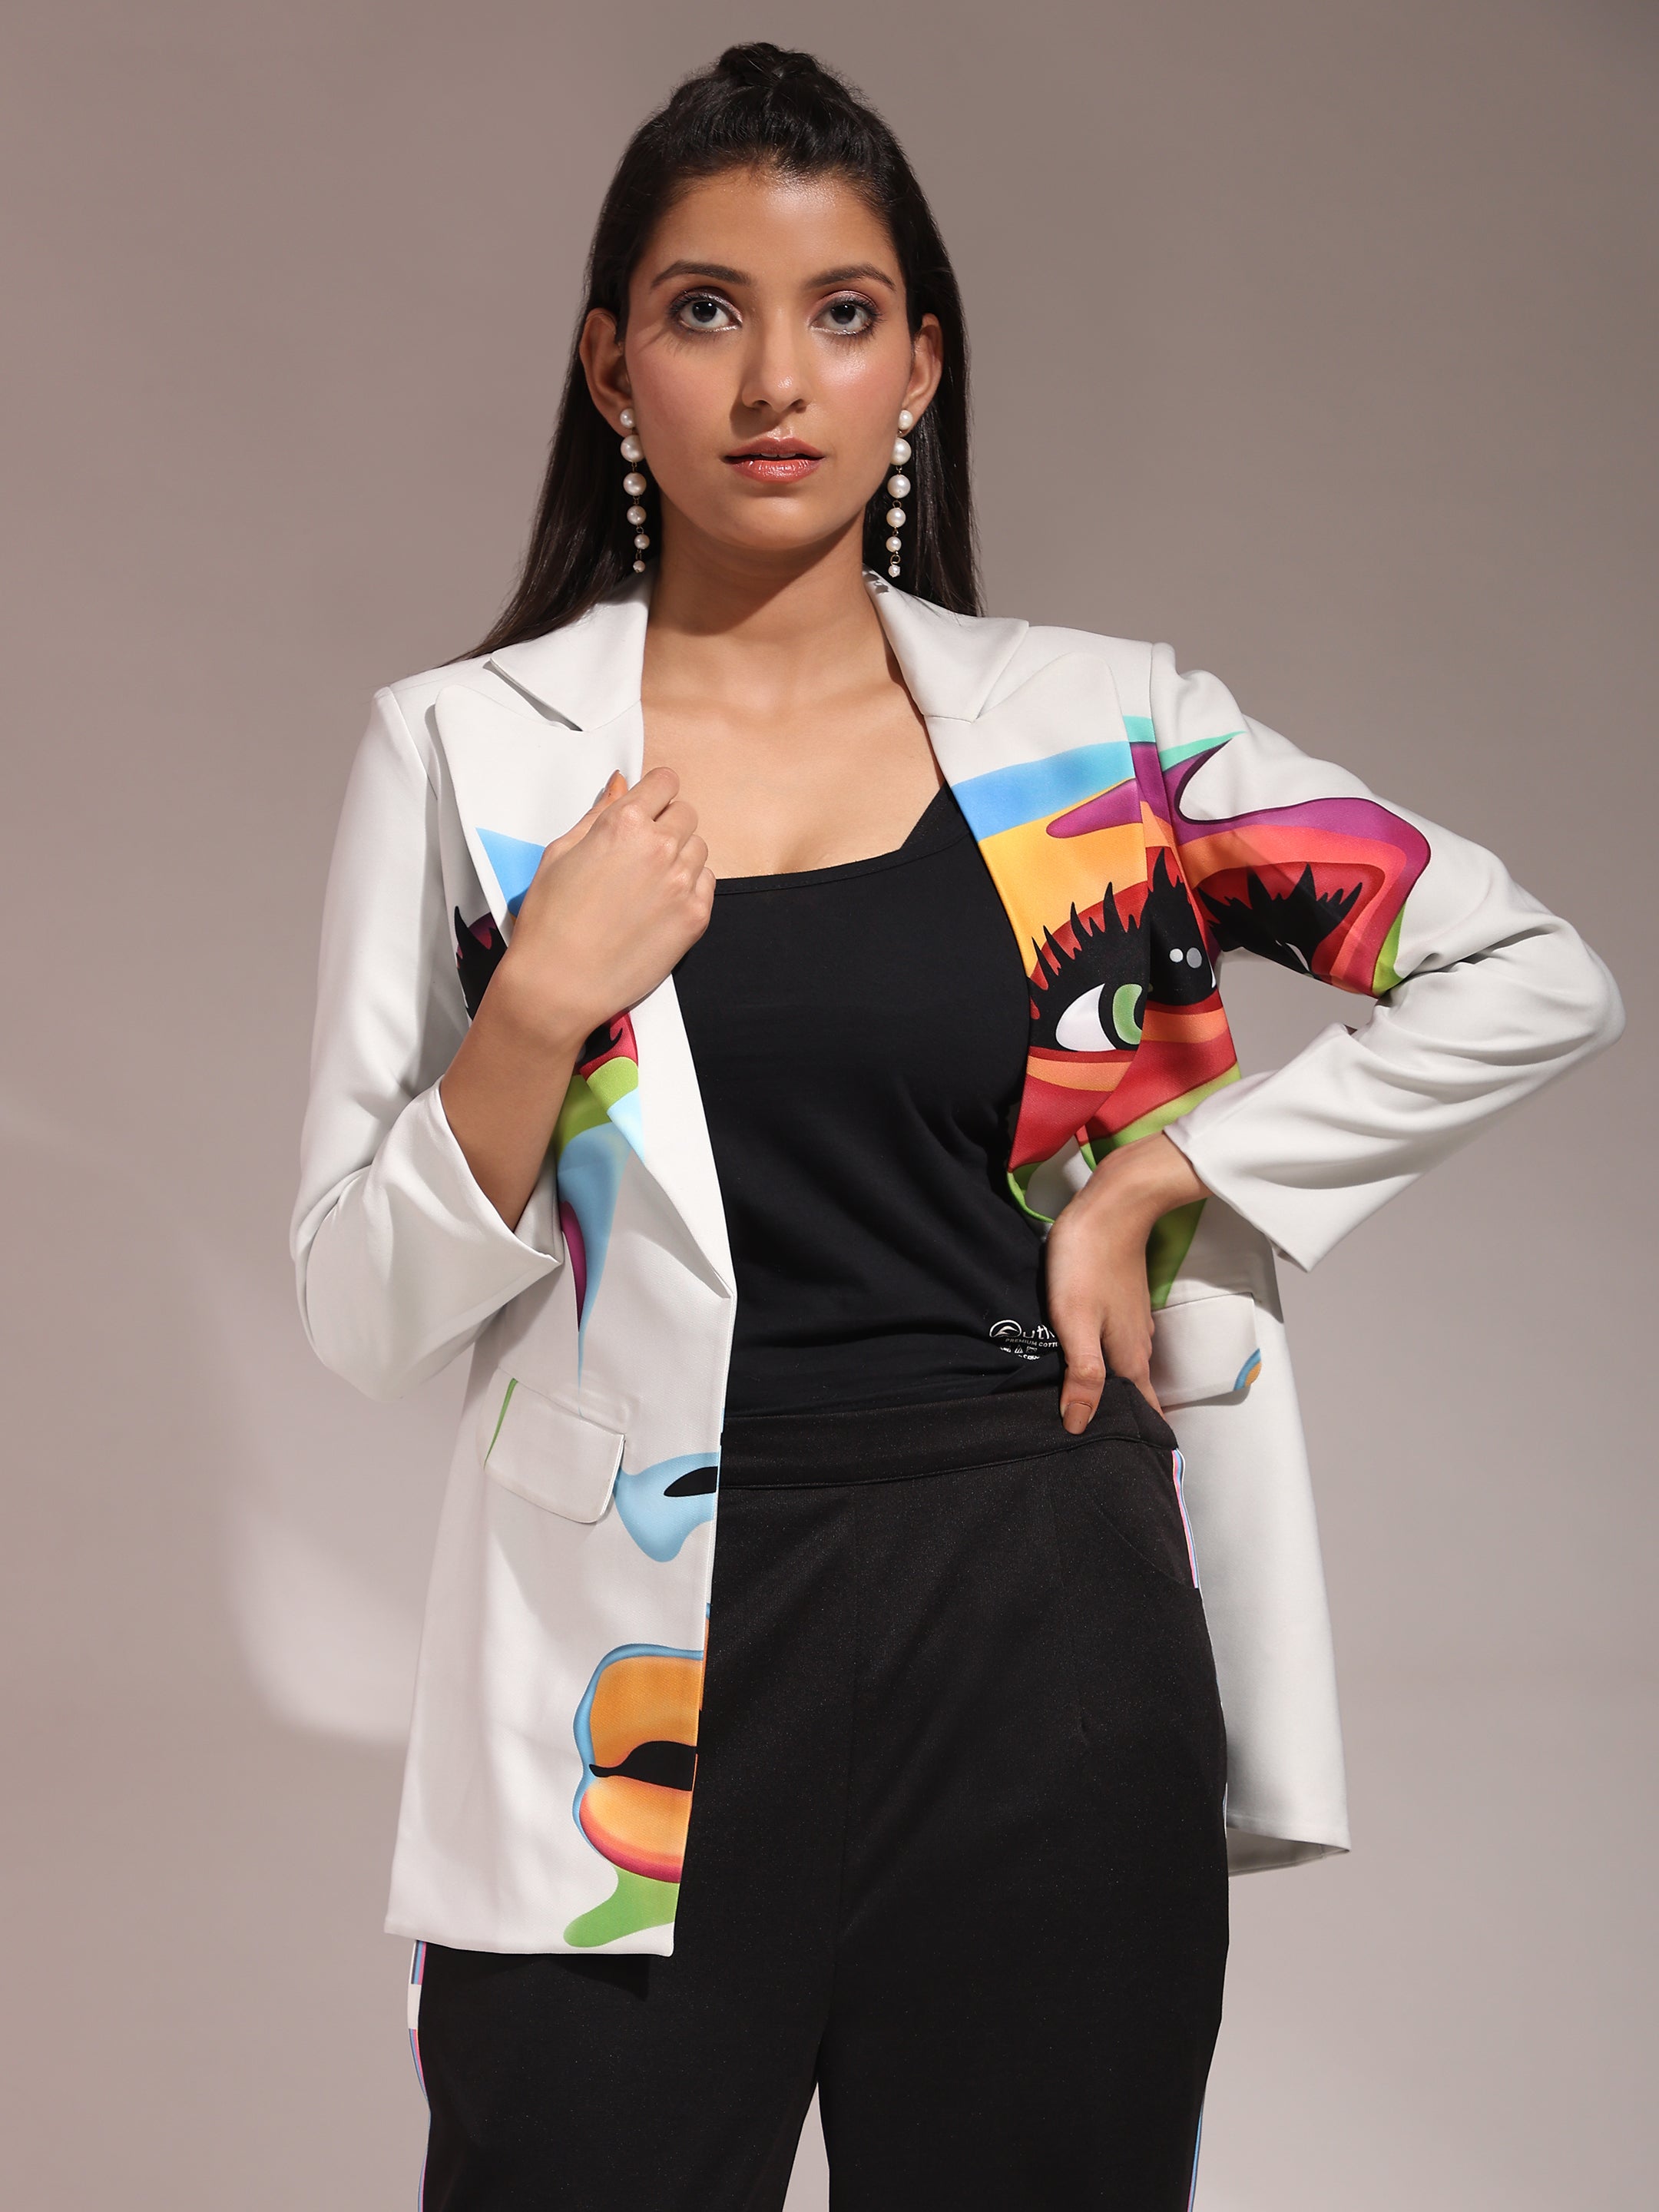 Women's Indowestern Style Ensemble Elegant Ivory Top With Sleek Black Pants Premium Banana Crepe Fabric For Luxurious Comfort - Phenav